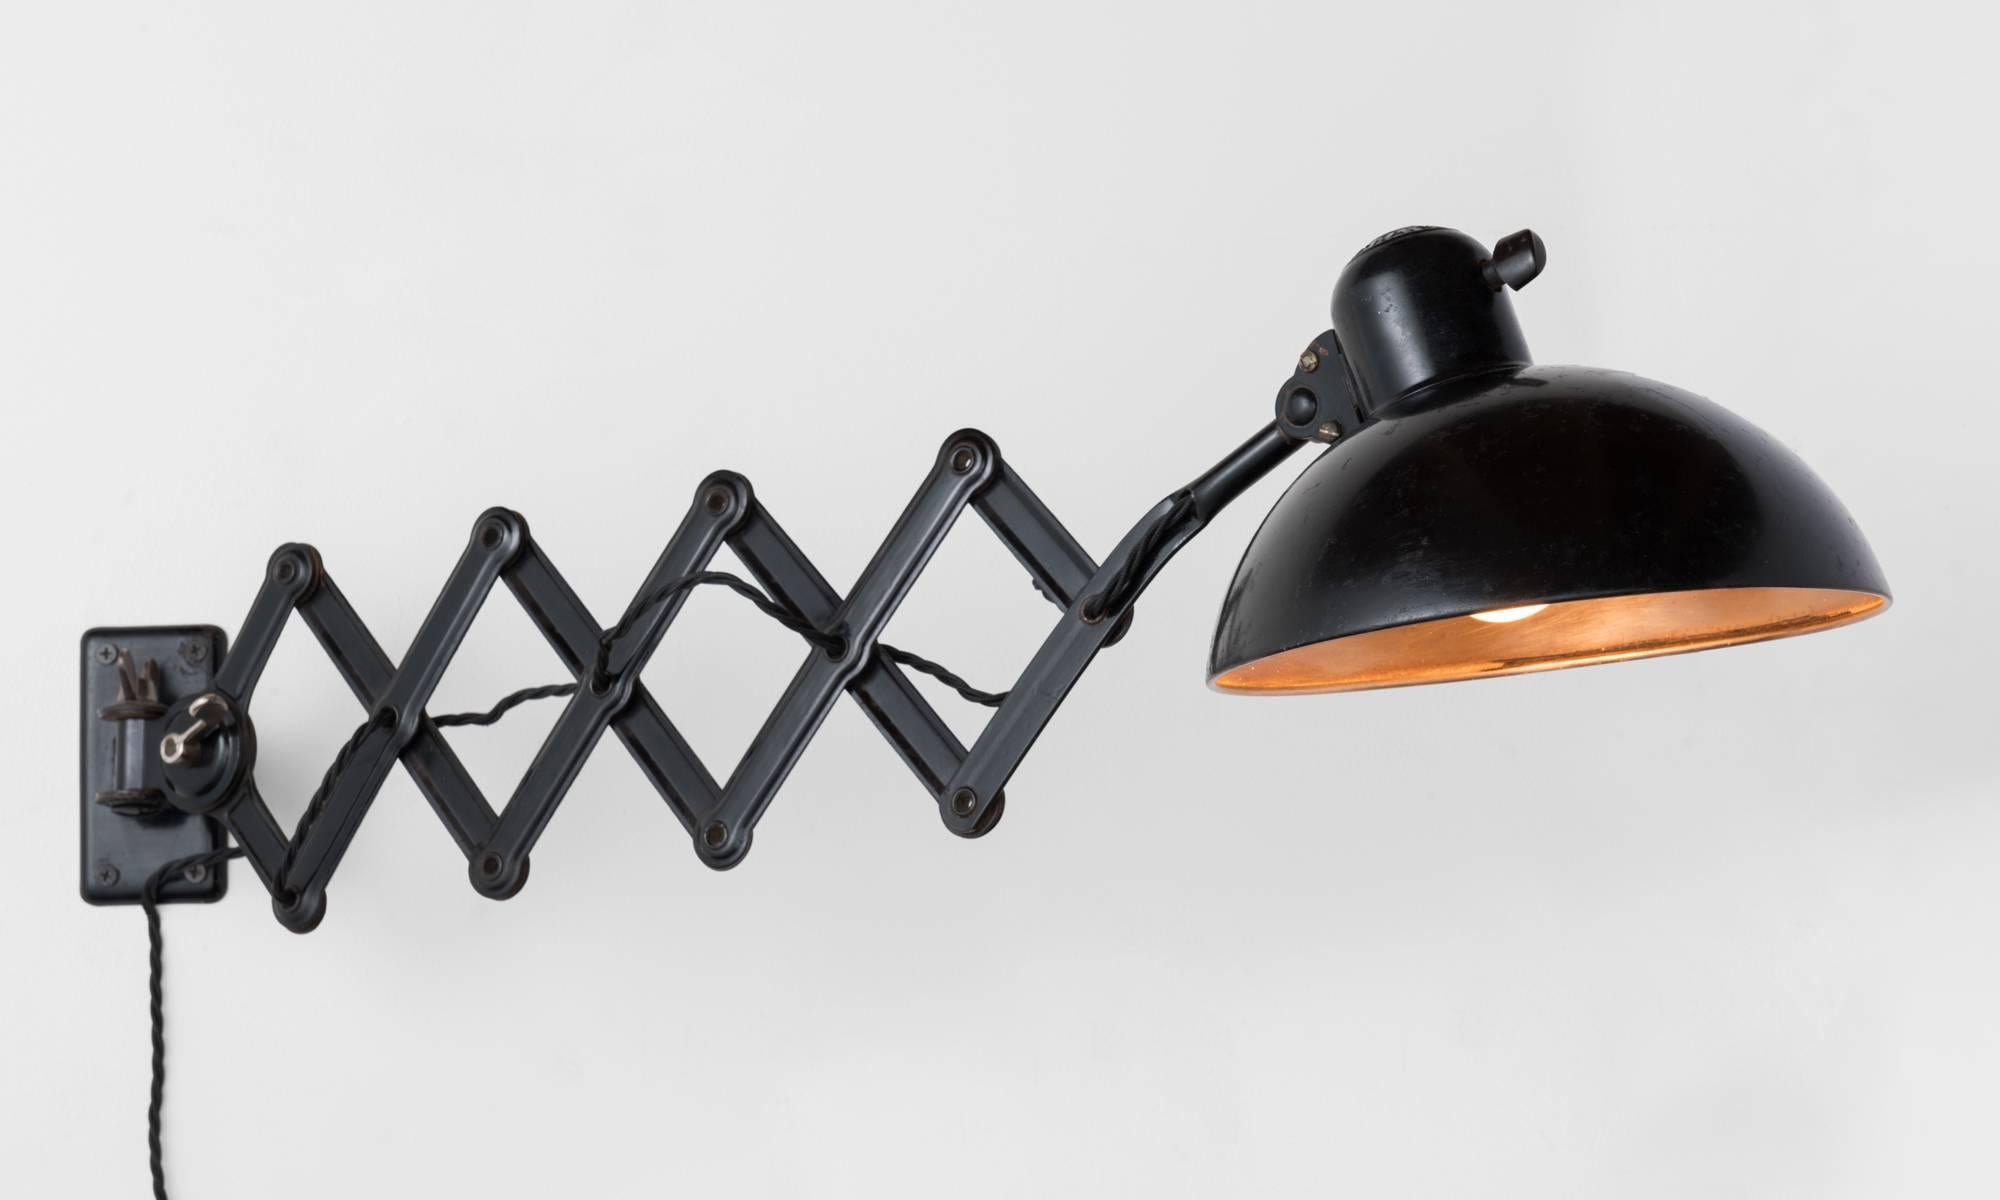 Scissor Lamp by Kaiser Idell, Germany, circa 1940

Model 6718 extendable lamp in original black paint. 

Lamp extends 16